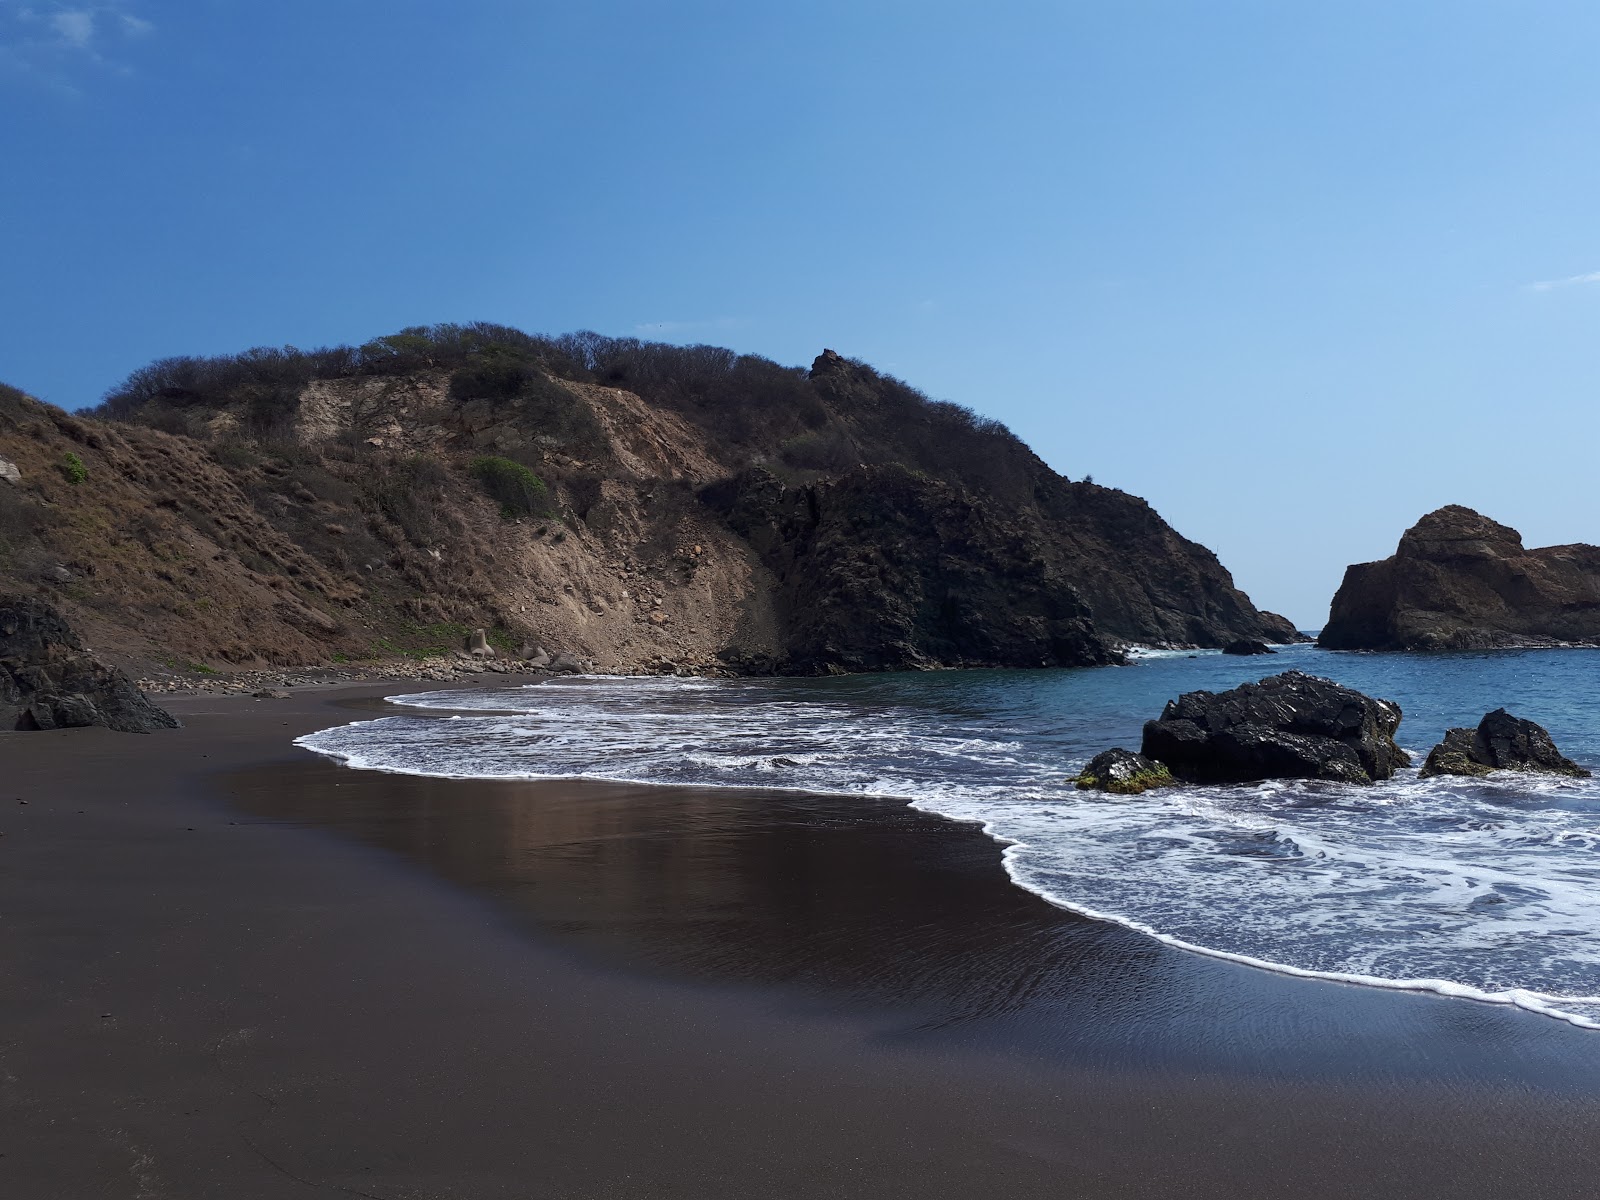 Fotografie cu Playa del Viejo cu o suprafață de nisip maro